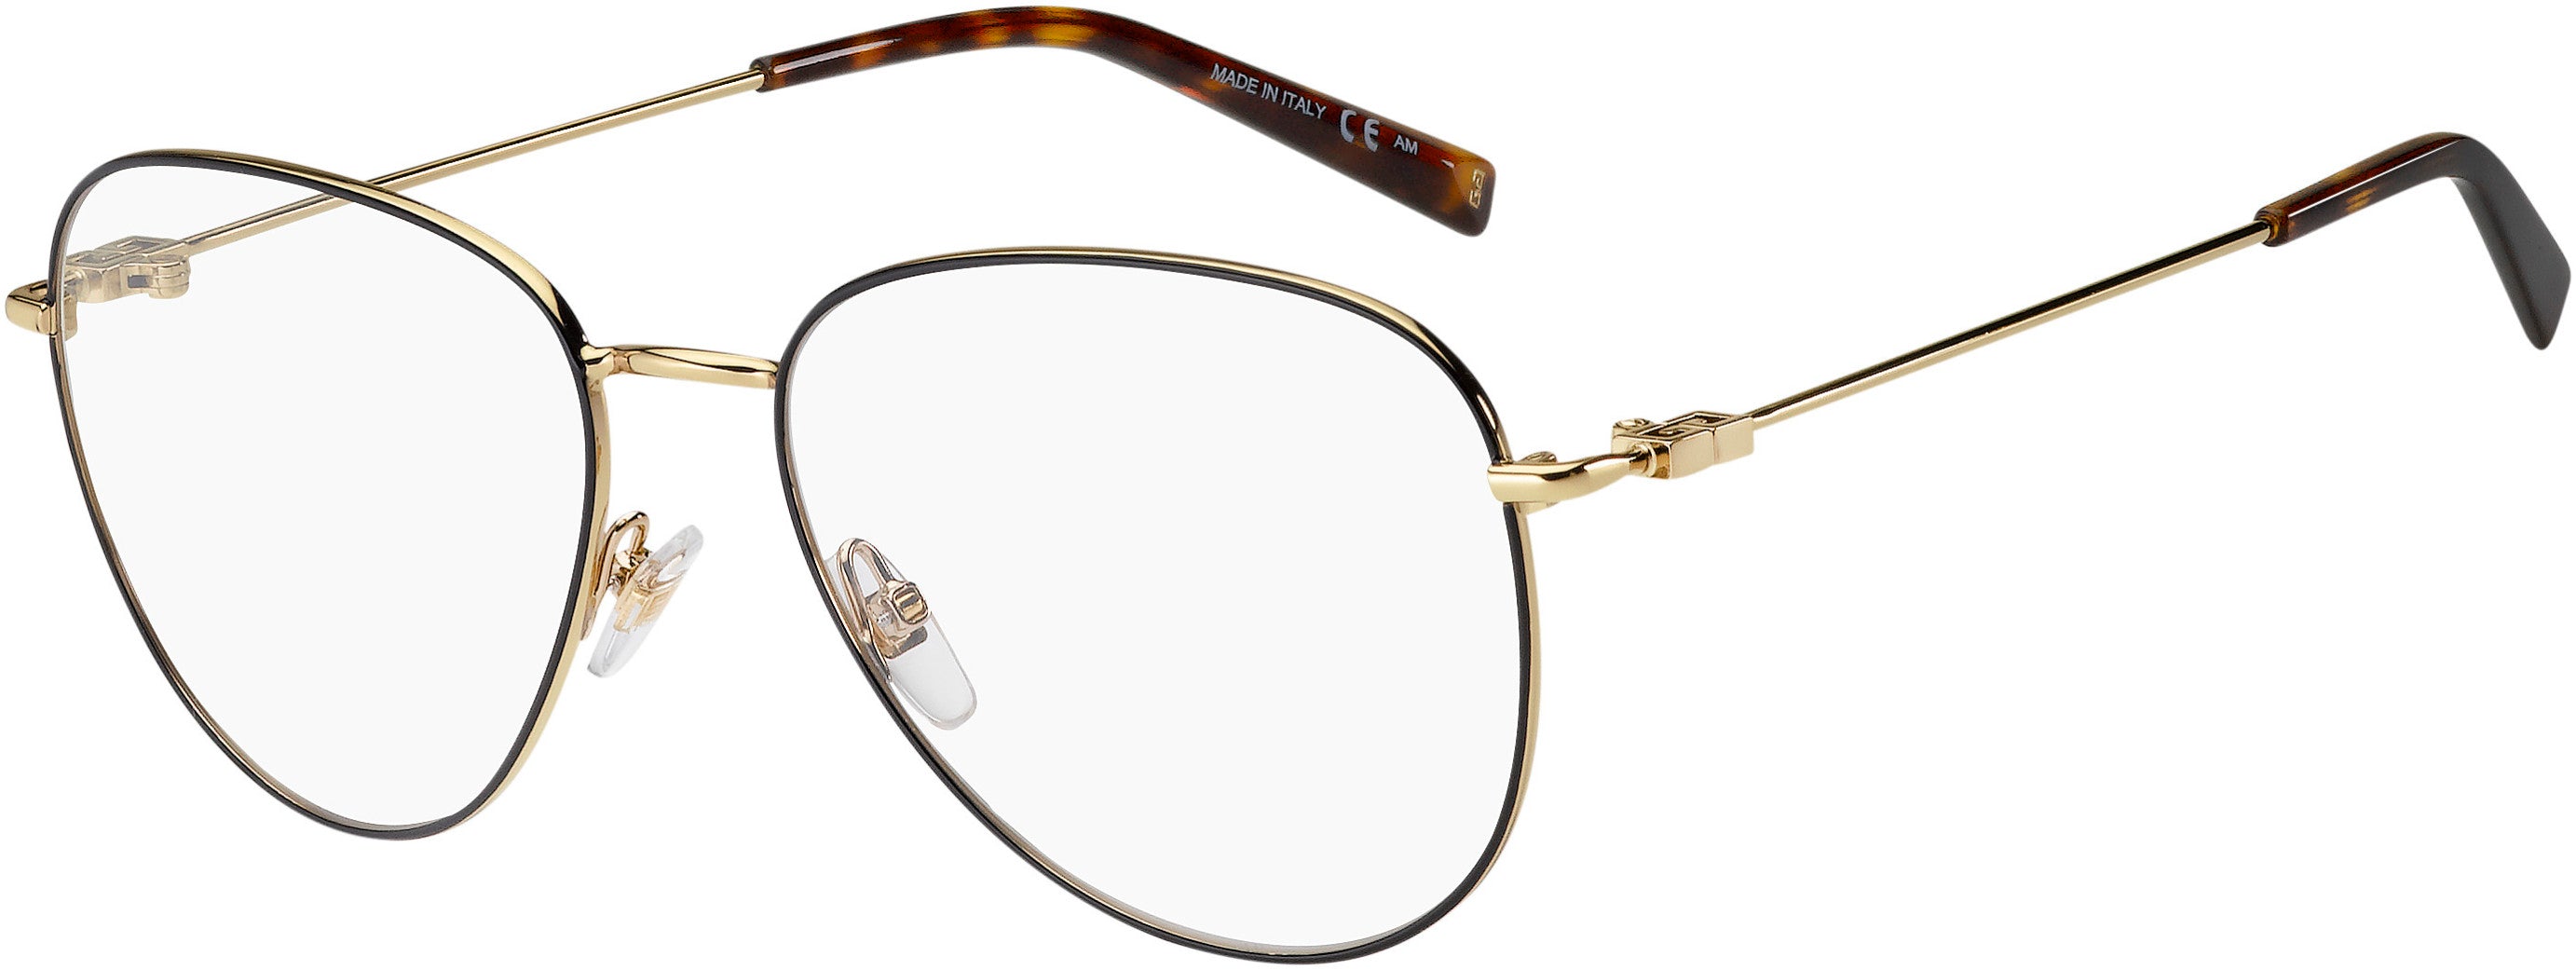  Givenchy 0150 Oval Modified Eyeglasses 02M2-02M2  Black Gold (00 Demo Lens)